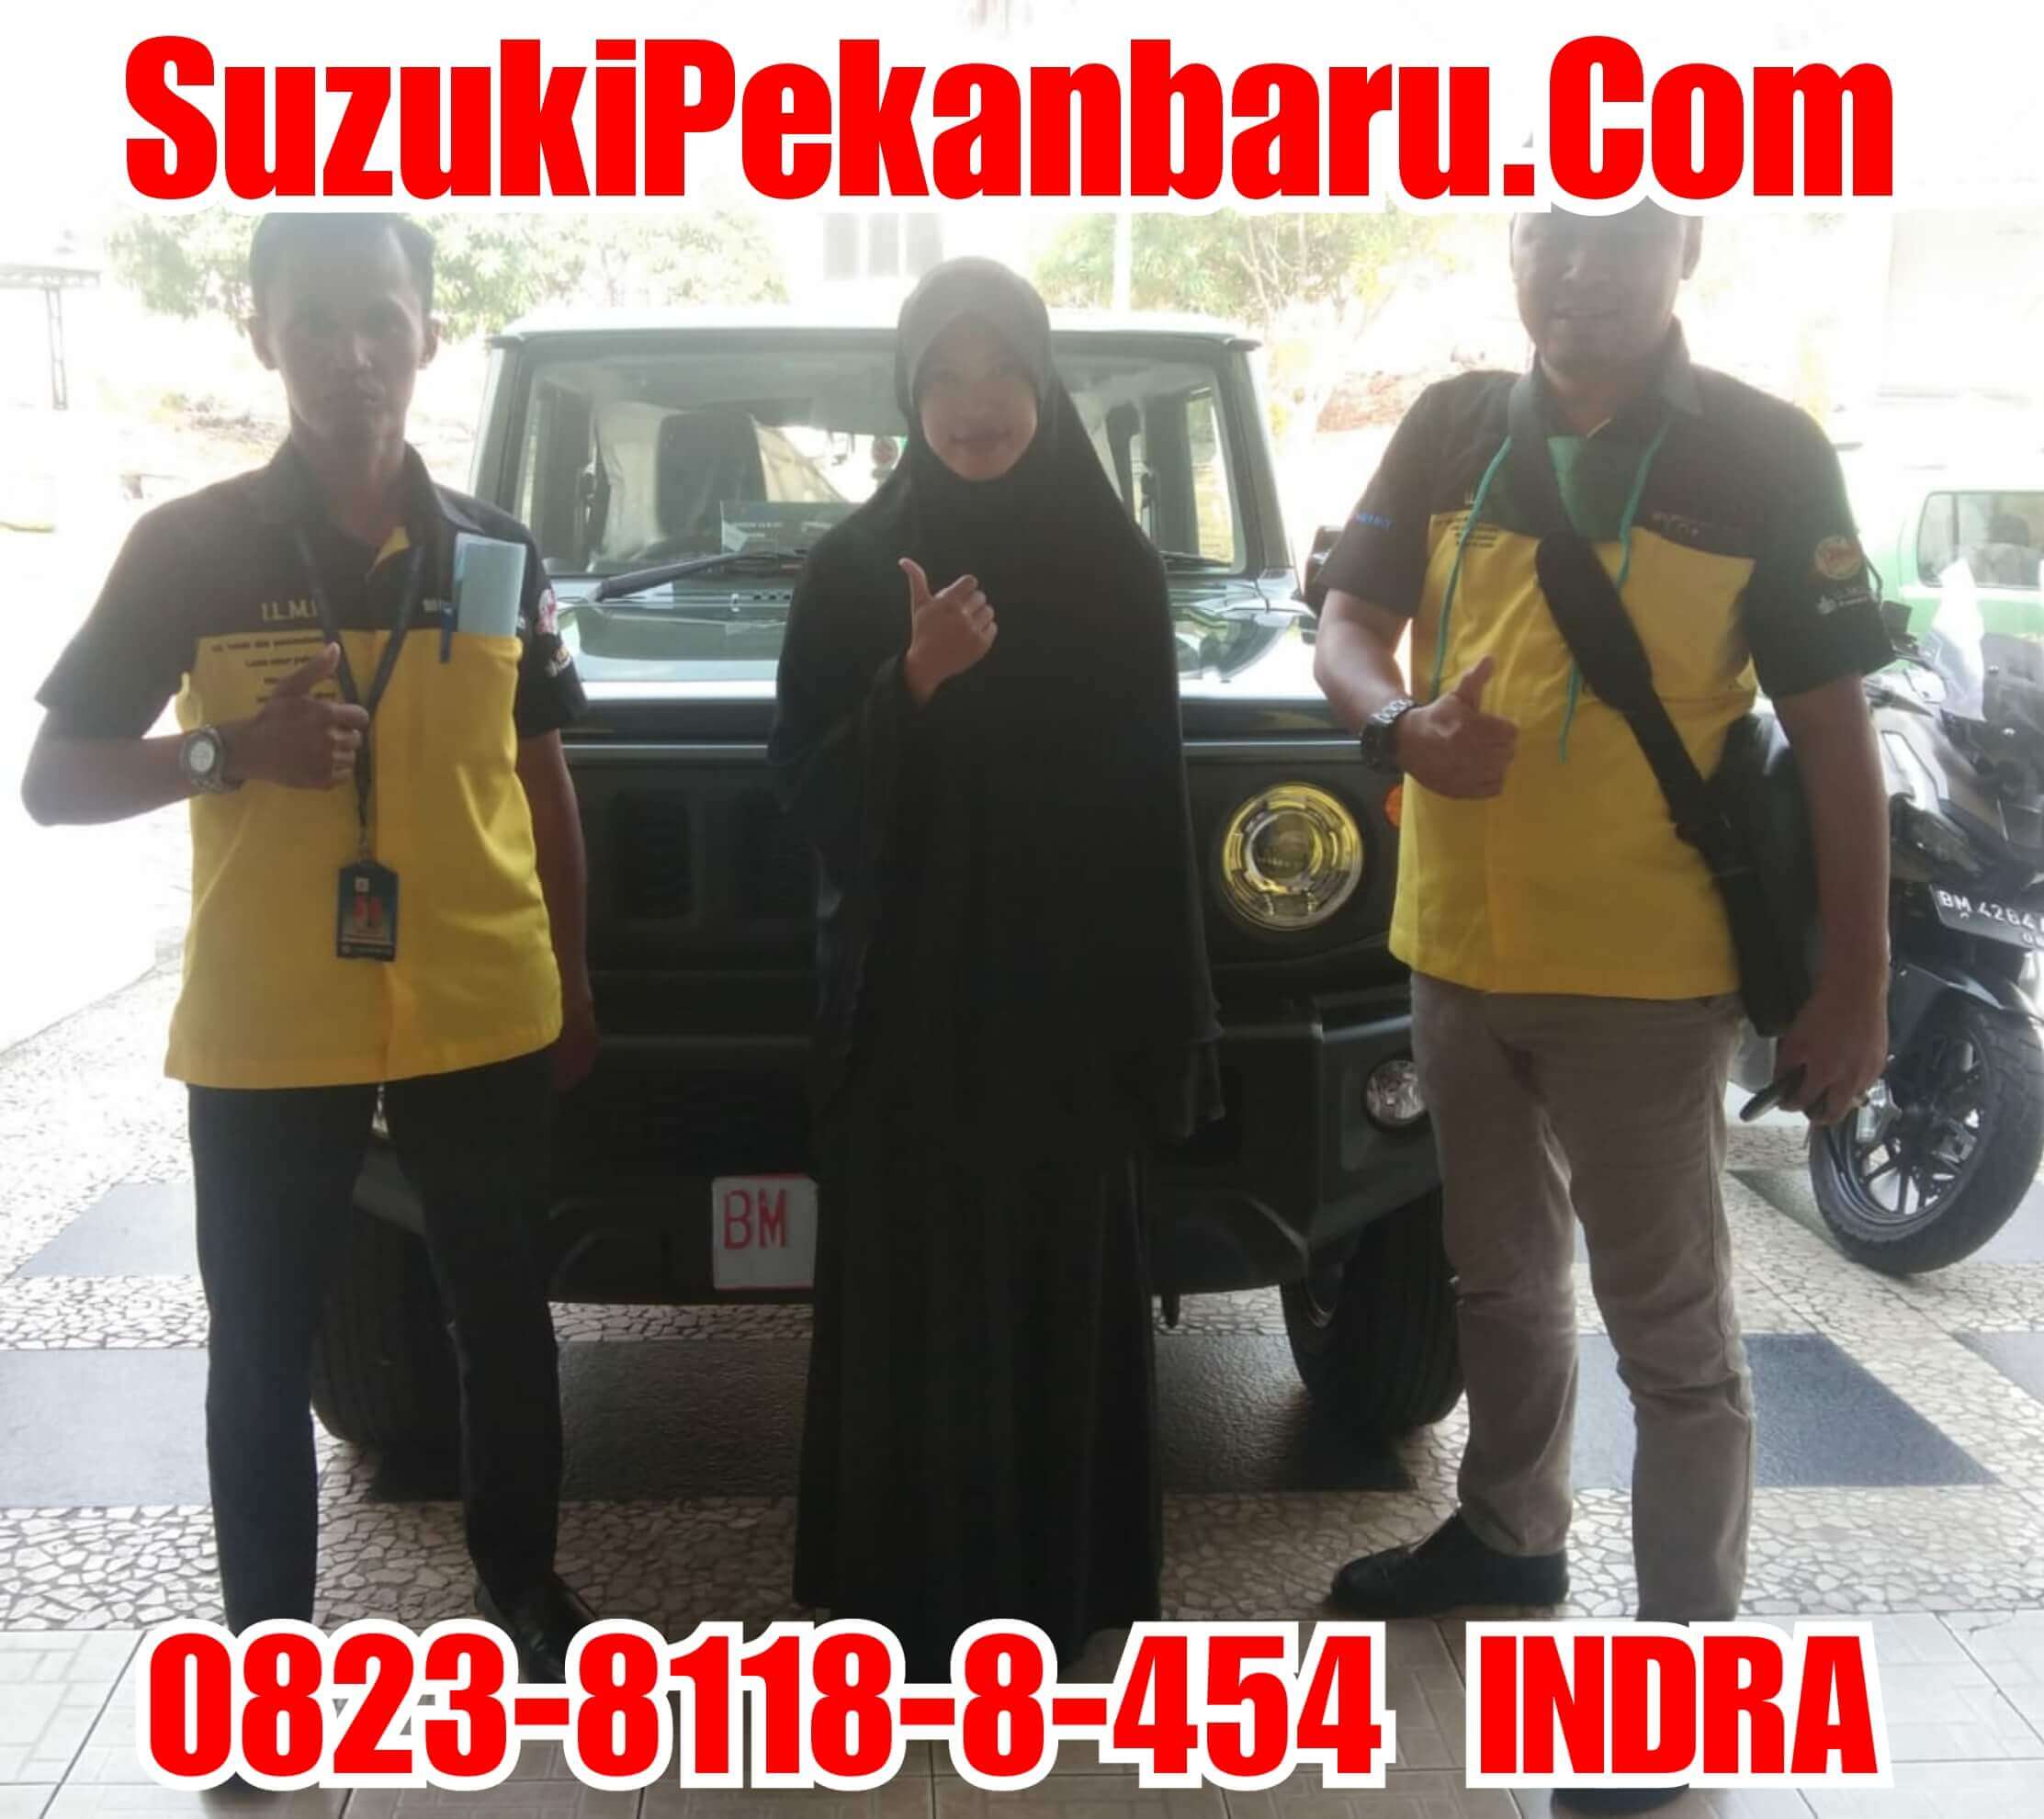 Daftar Harga Kredit Paket Murah Karimun Wagon IGNIS Baleno Scross XL7 Angsuran Tanpa DP Dealer Mobil Suzuki Pekanbaru Riau Ertiga Mega Carry Pick Up